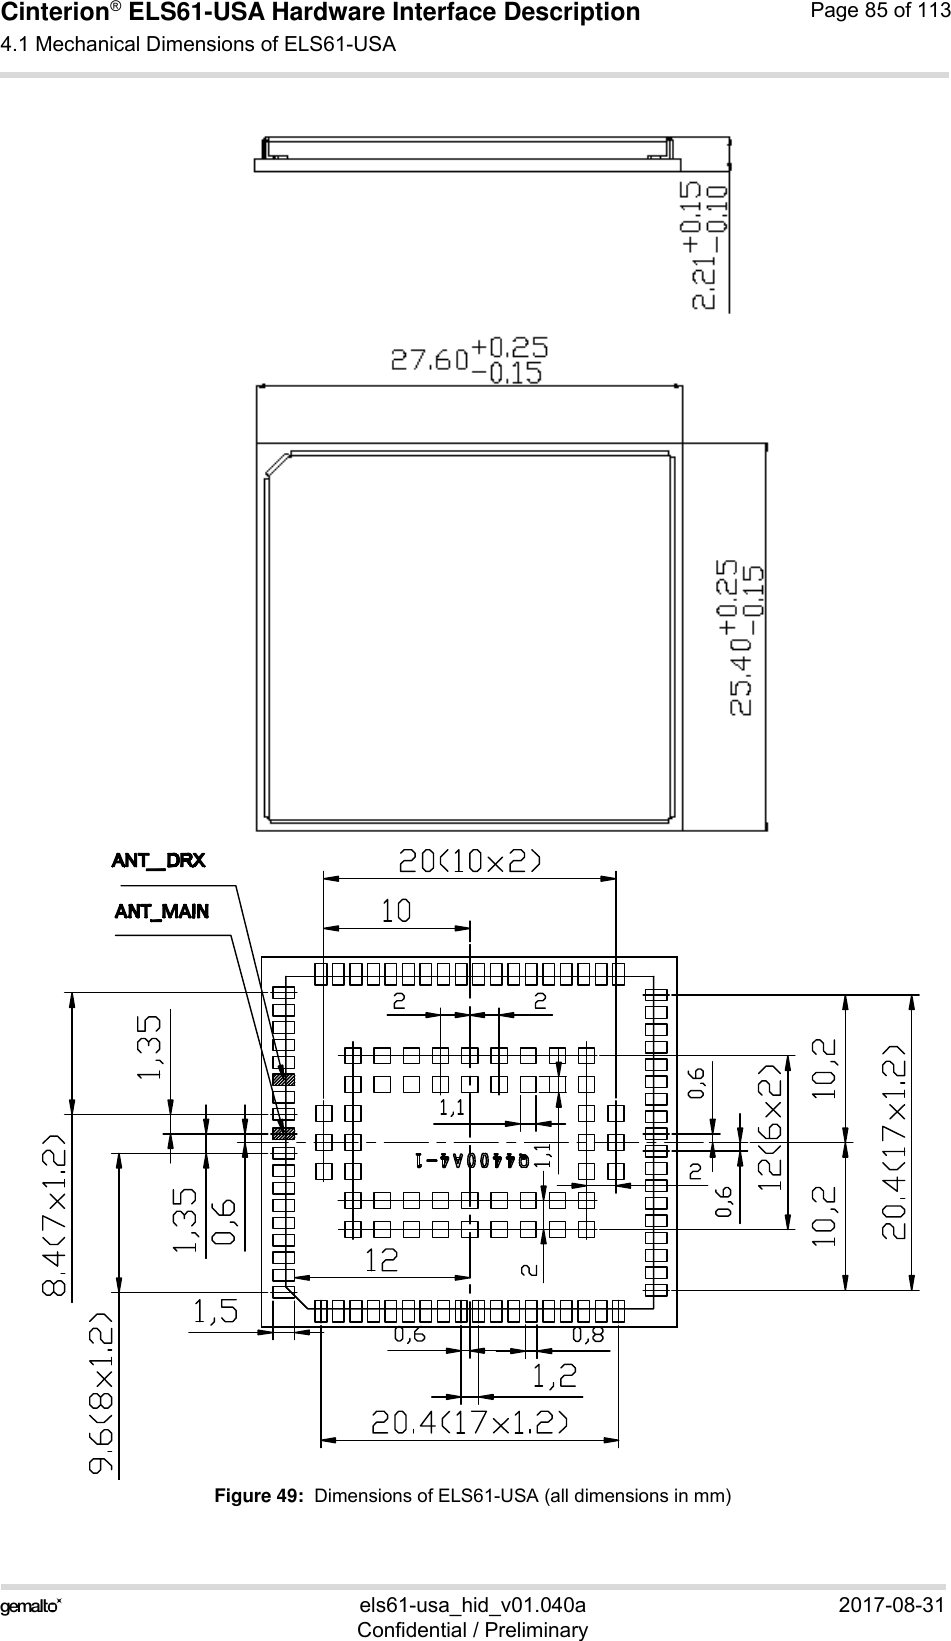 Cinterion® ELS61-USA Hardware Interface Description4.1 Mechanical Dimensions of ELS61-USA98els61-usa_hid_v01.040a 2017-08-31Confidential / PreliminaryPage 85 of 113Figure 49:  Dimensions of ELS61-USA (all dimensions in mm)